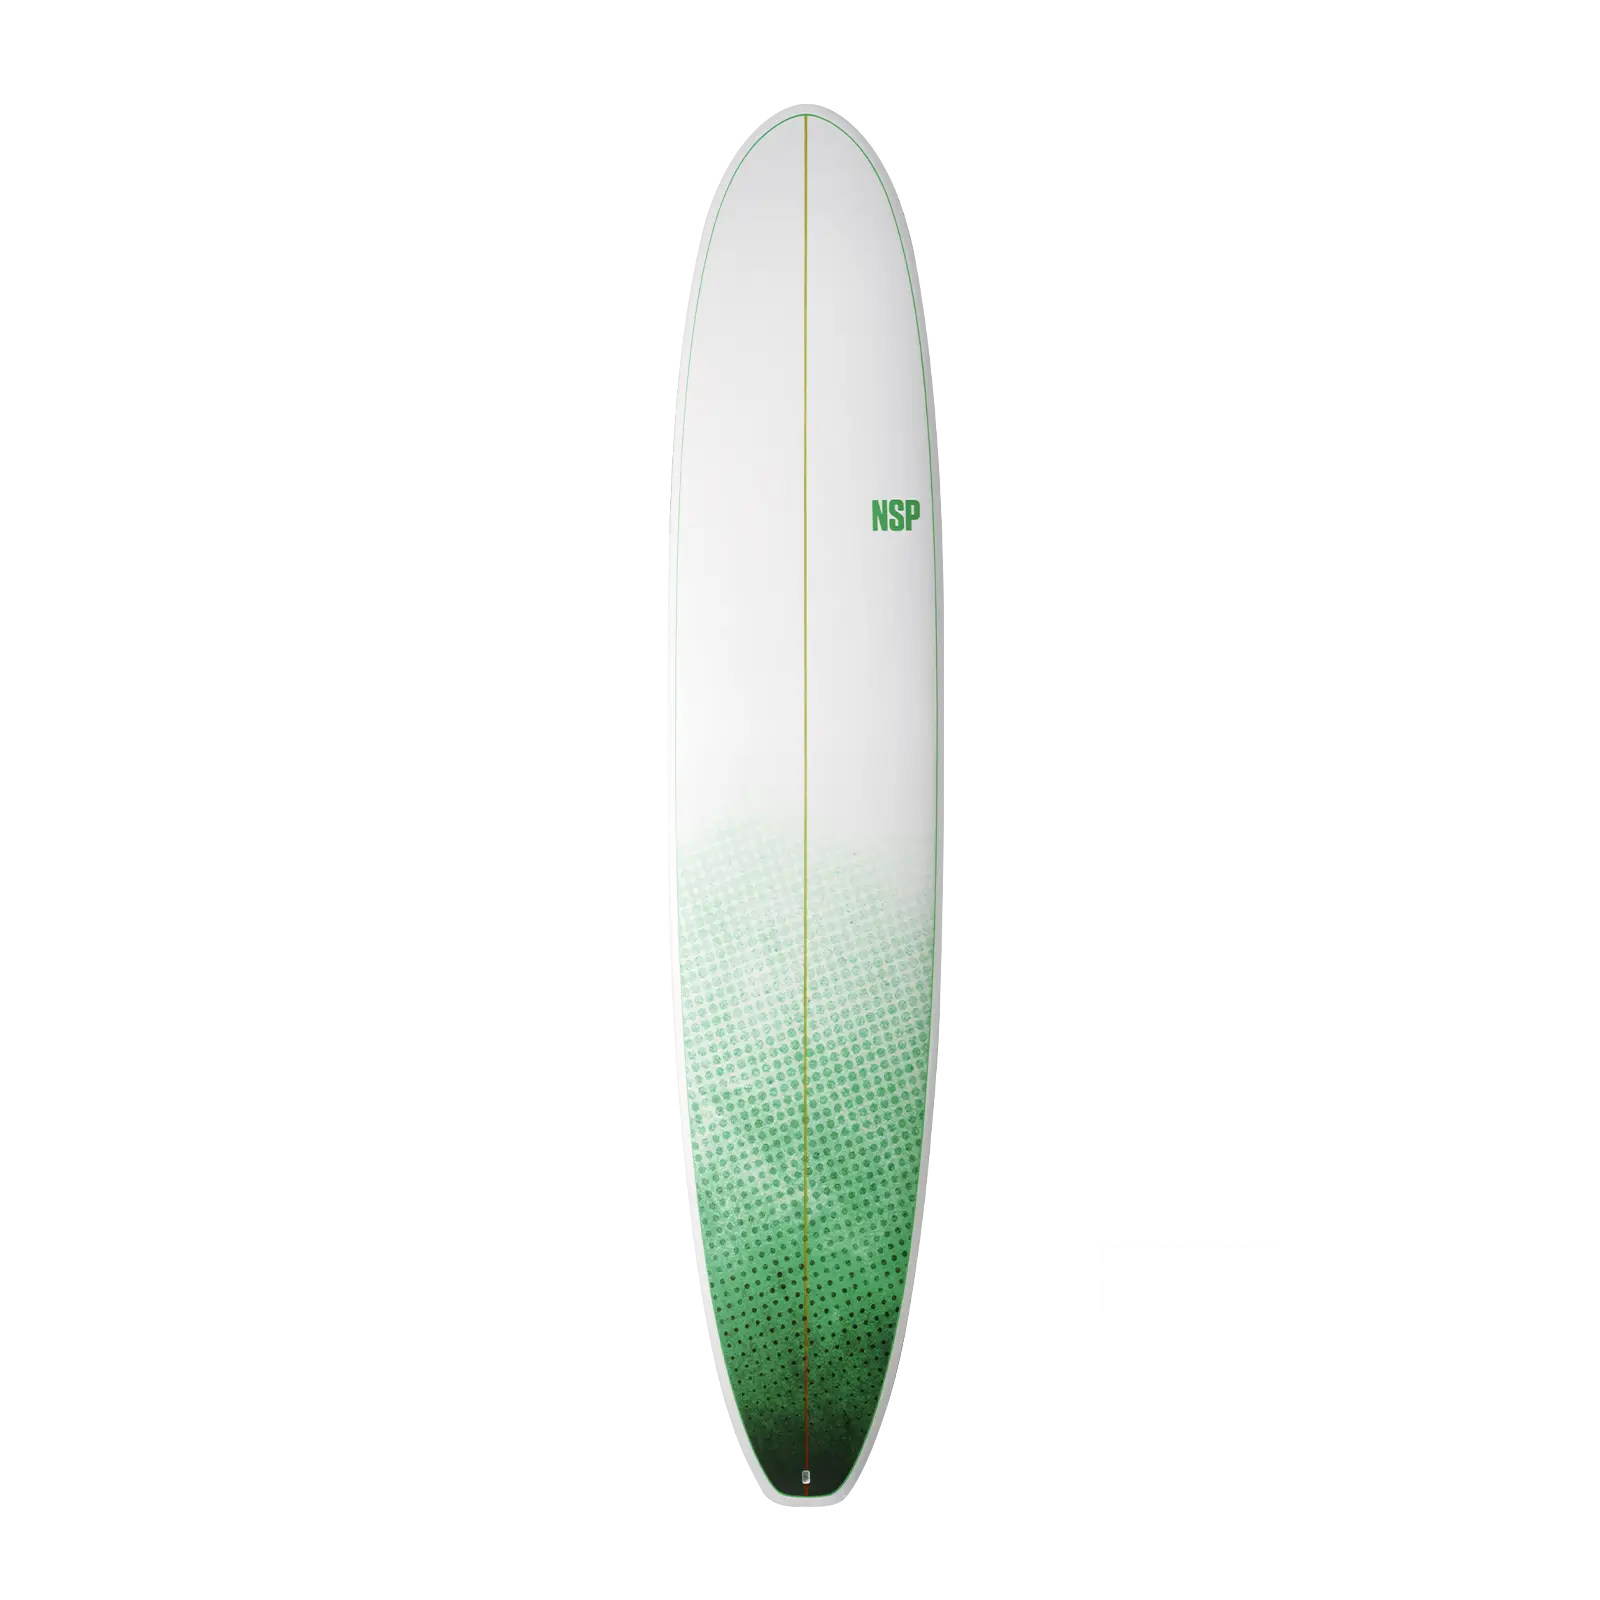 NSP Longboard E+ 10'0" | 92.3 L Green NSP Europe